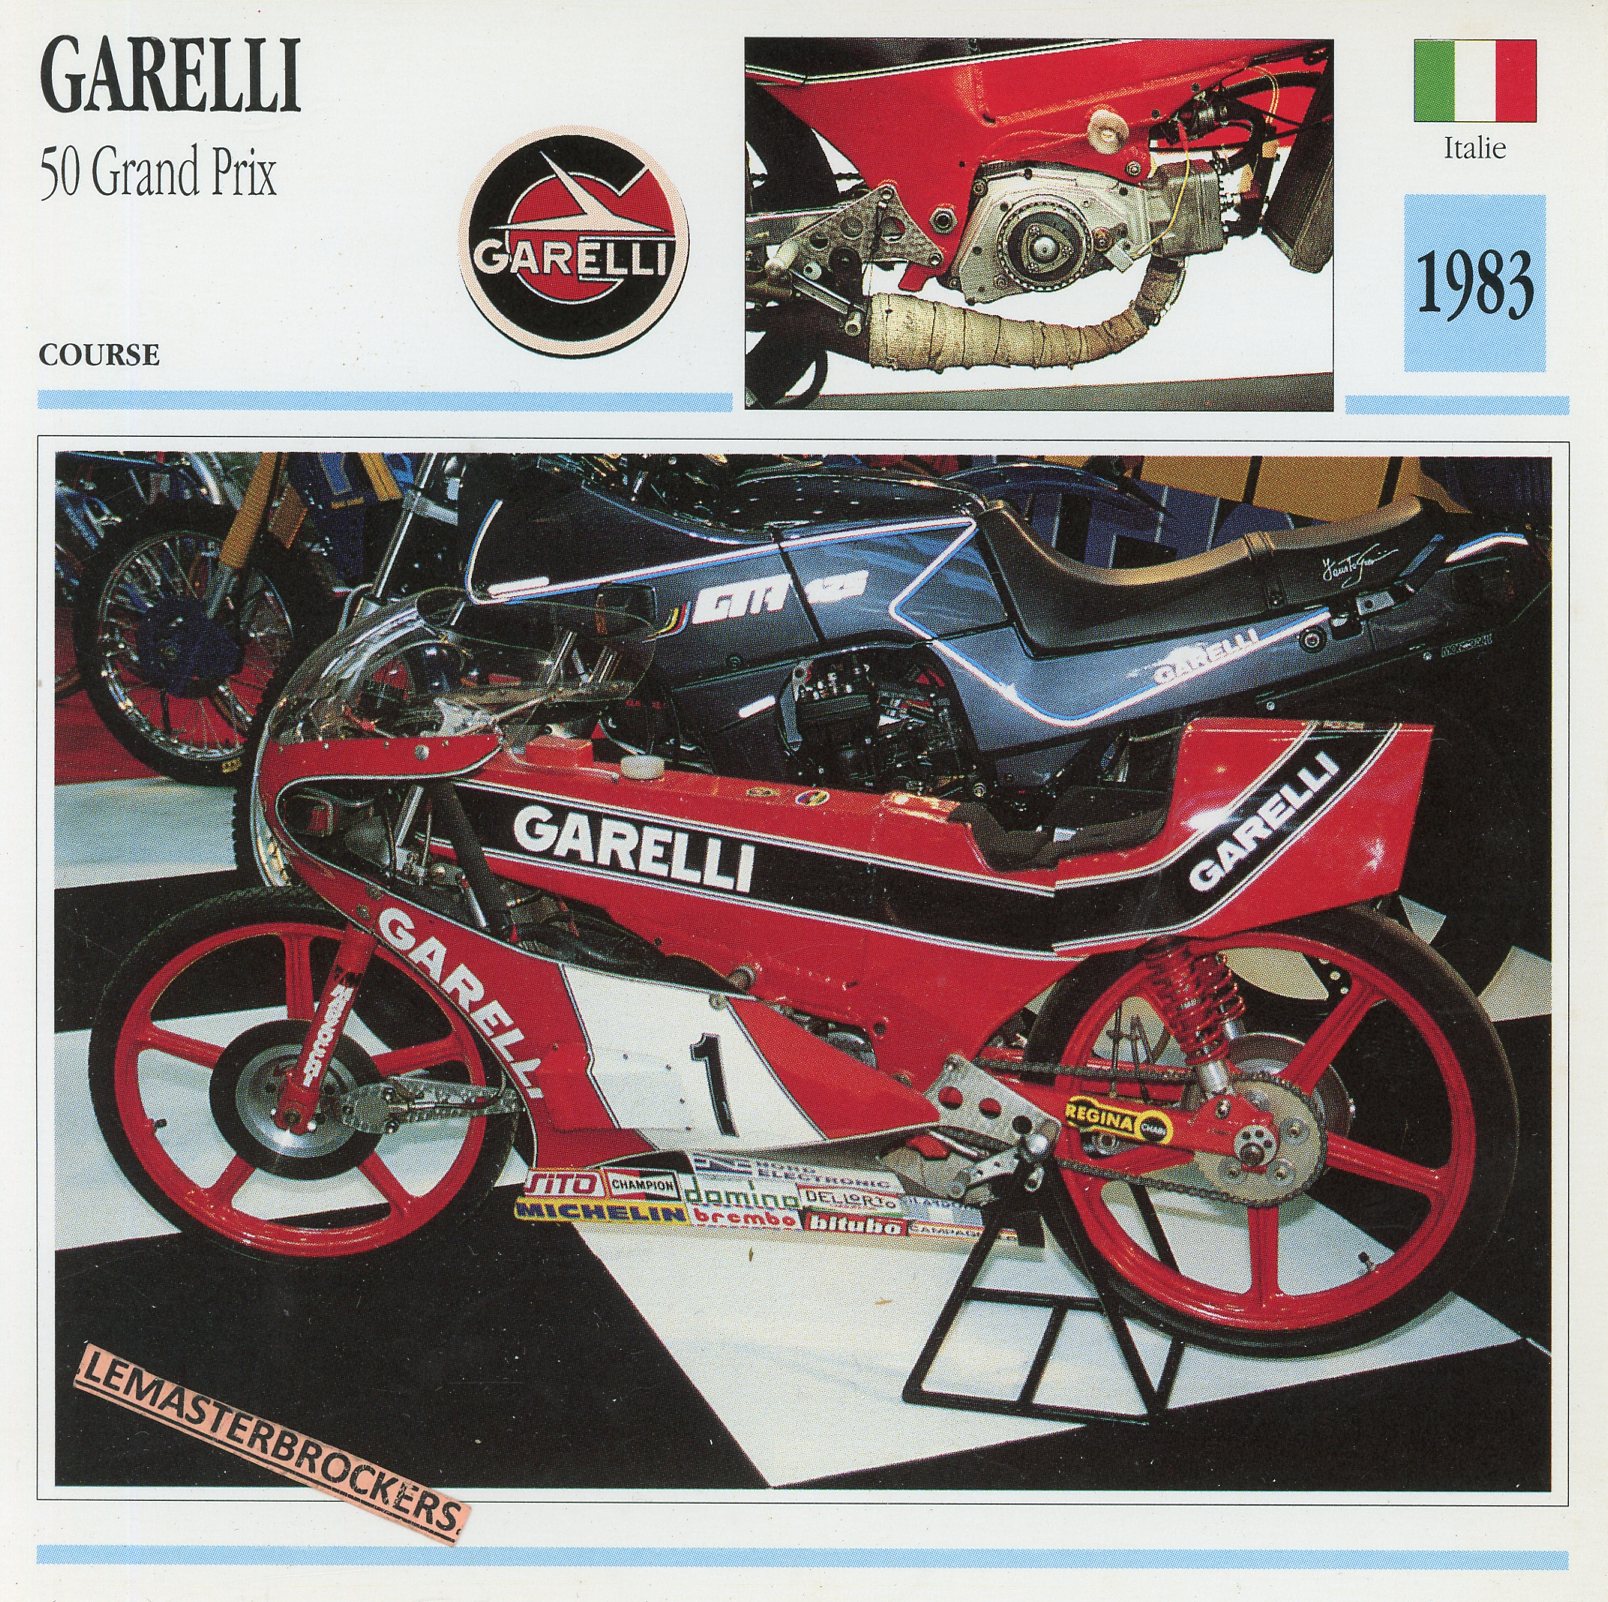 FICHE-MOTO-GARRELI-50-GP-1983-CYCLOMOTEUR-LEMASTERBROCKERS